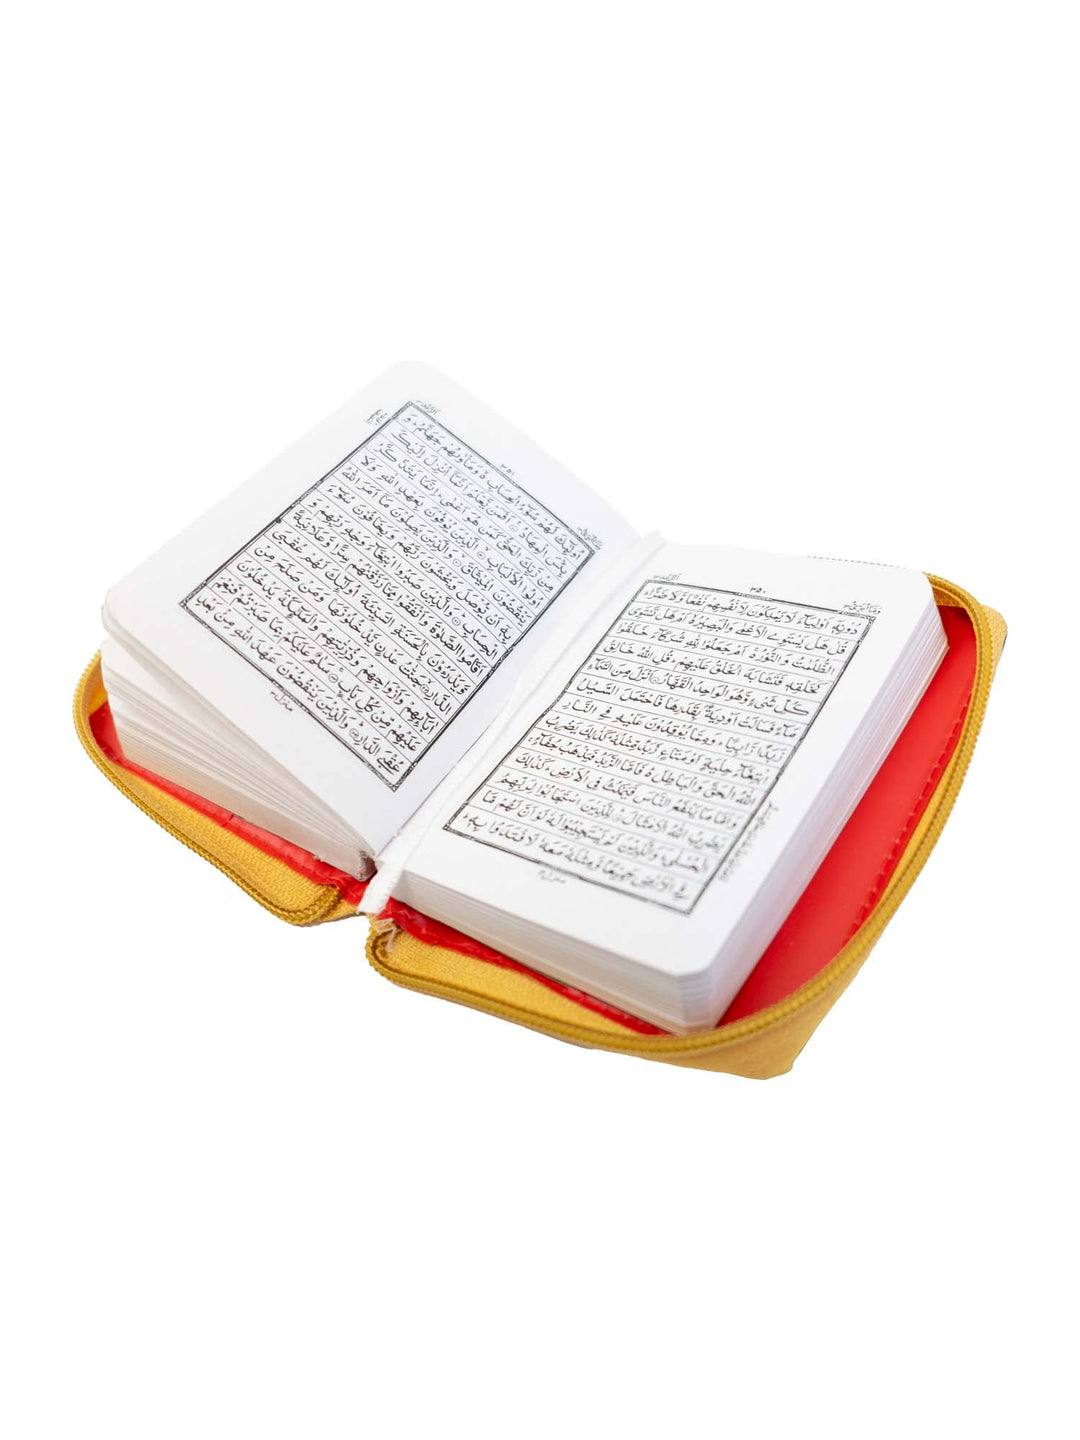 Gold Zip Quran 139 - 13 Line Indo Pak (Small)